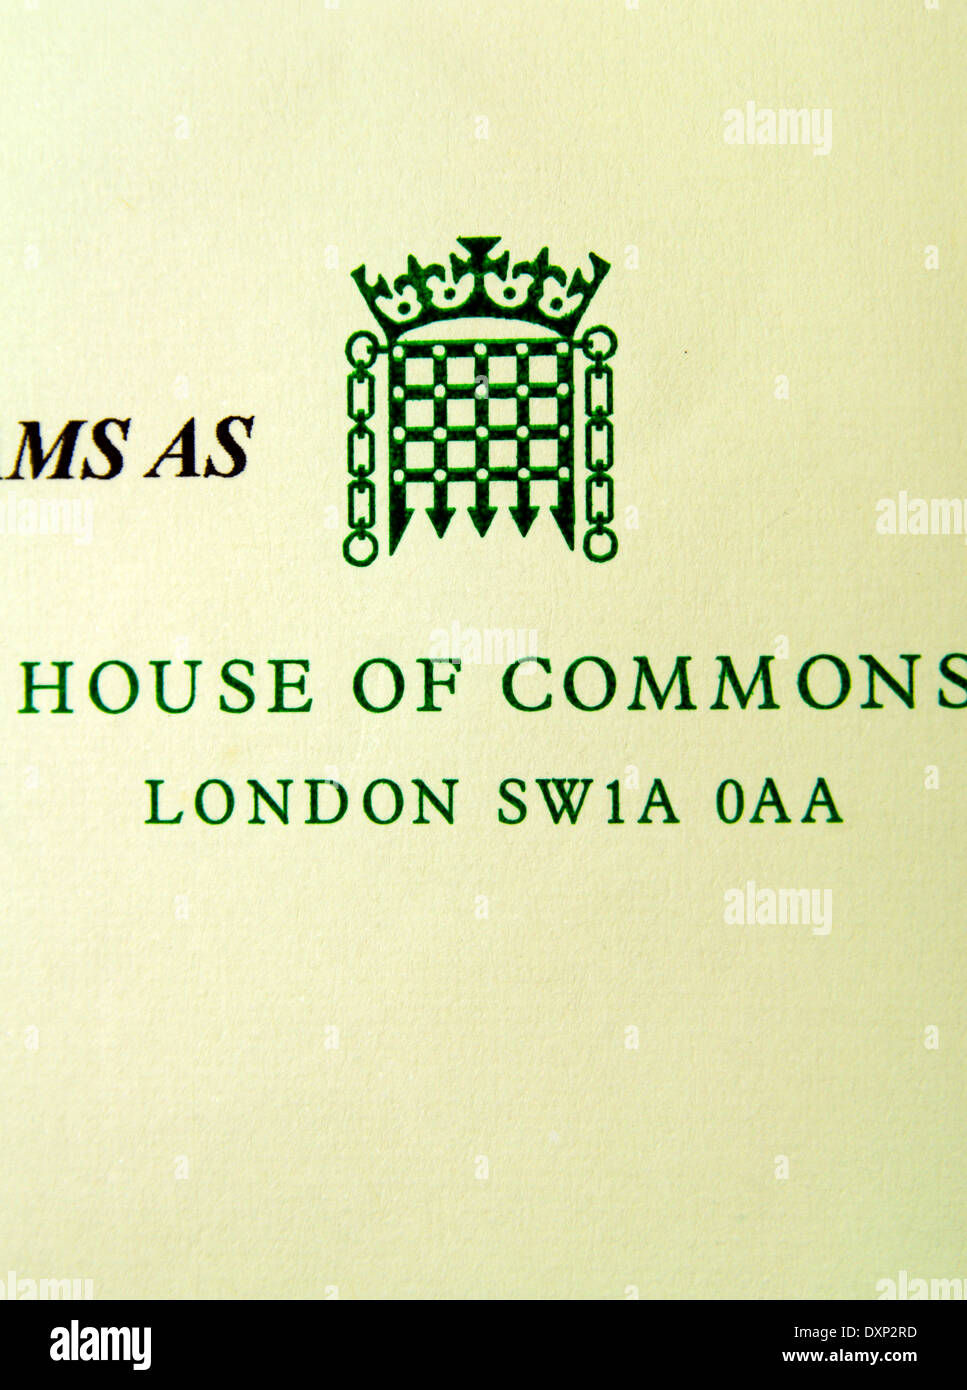 House of Commons Letterhead. Stock Photo